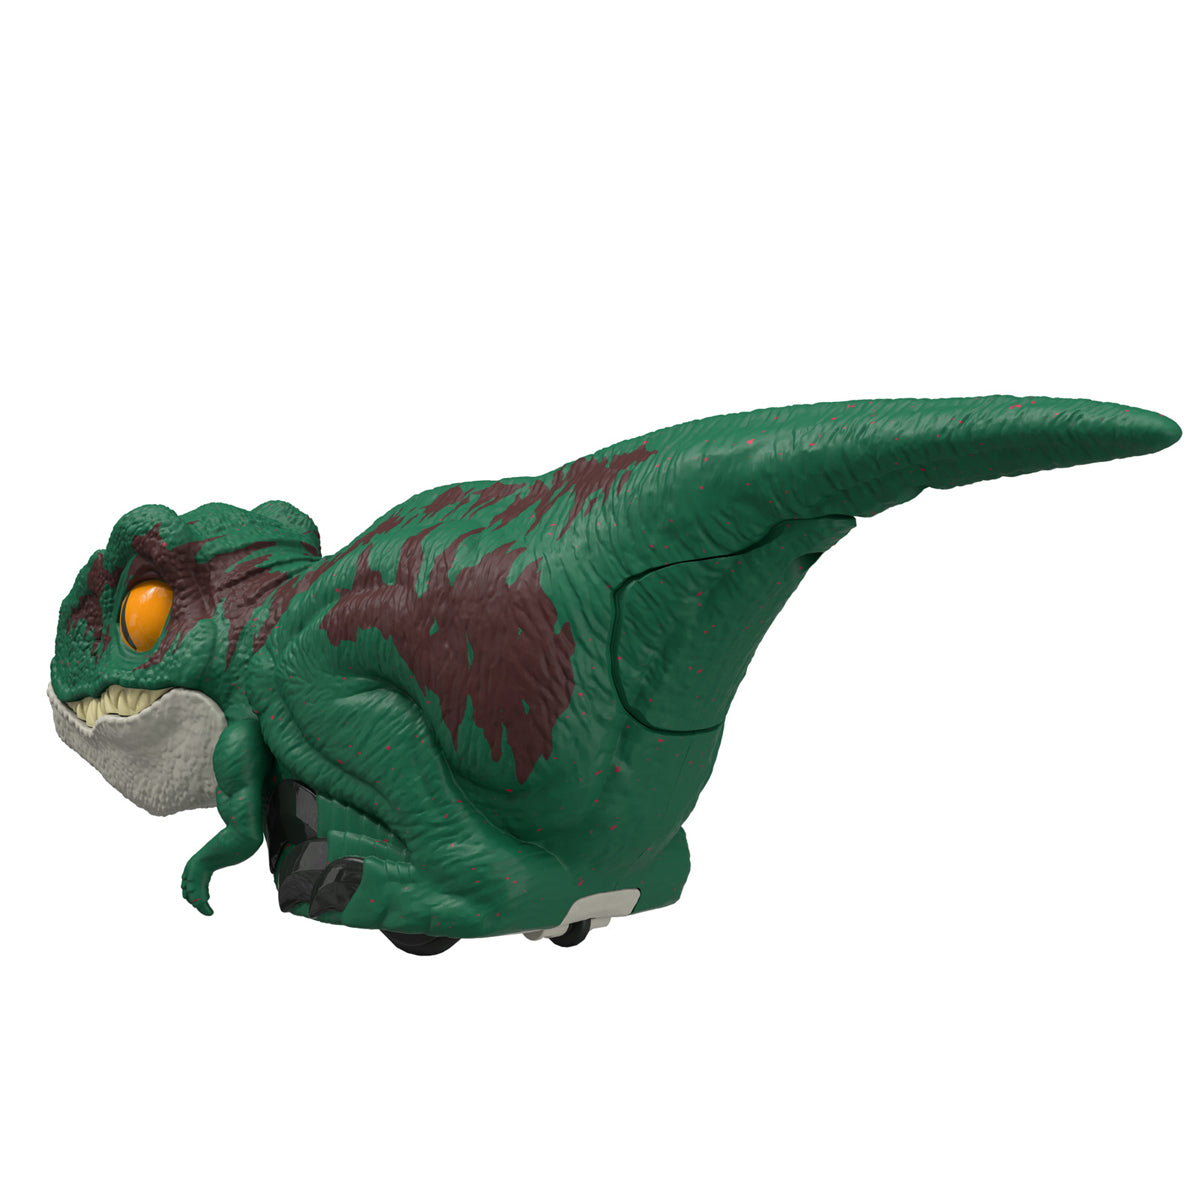 Jurassic World Dominion Uncaged - Click Tracker Velociraptor Dinosaur